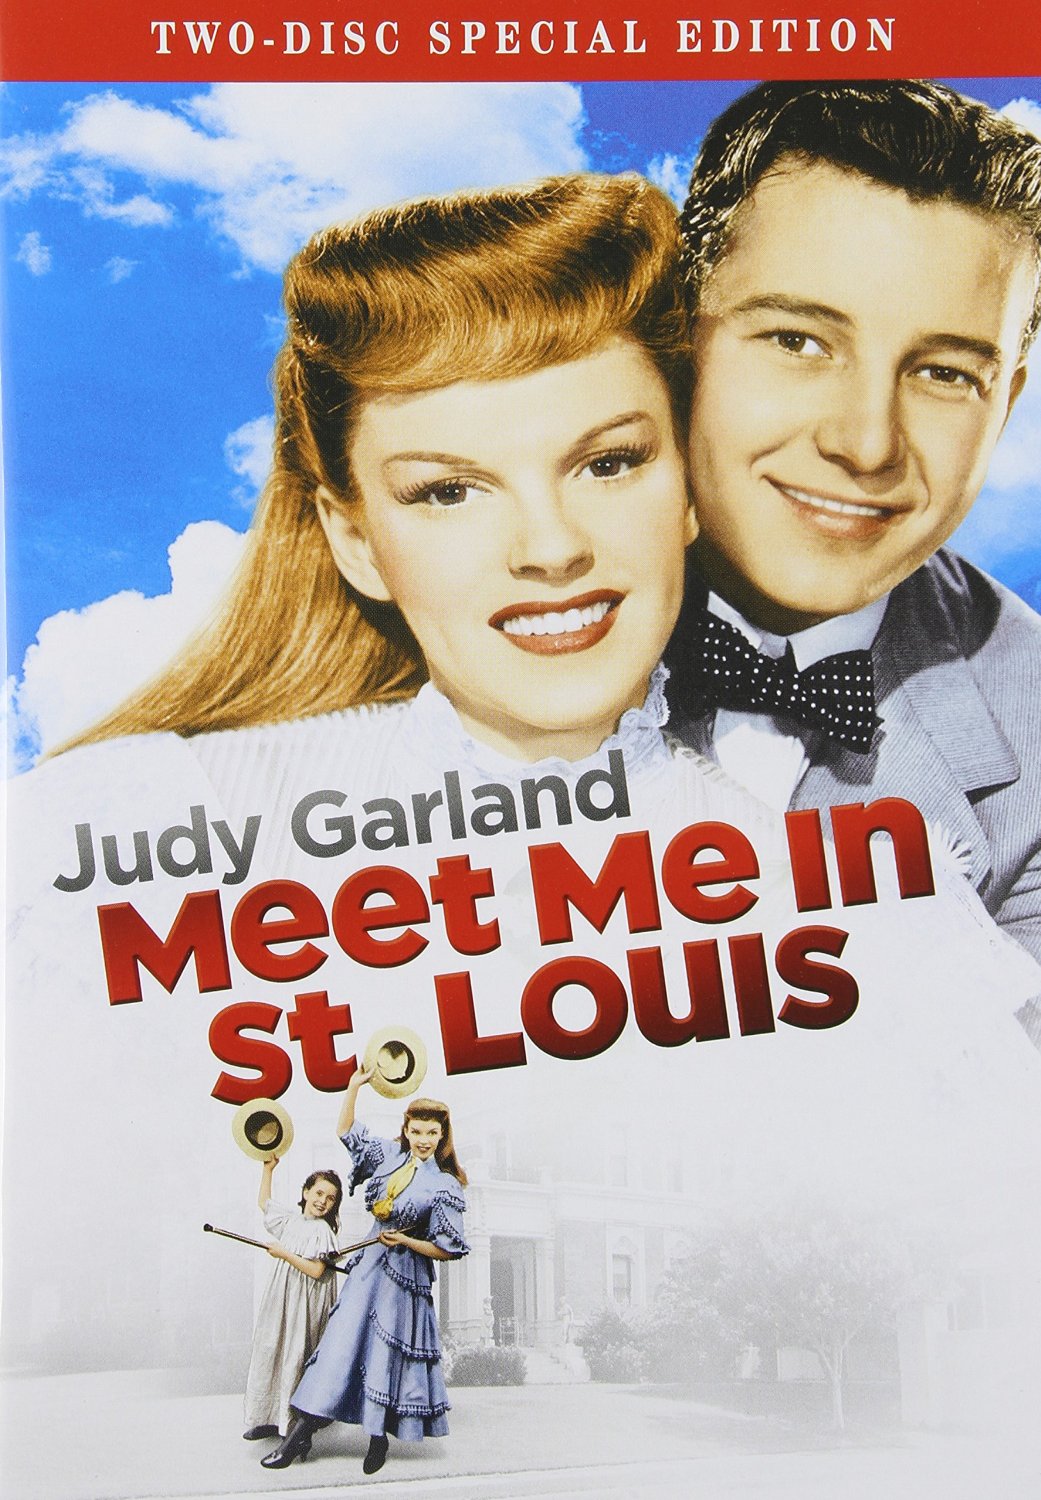 Meet Me in St. Louis lyrics - Family Friendly Movies